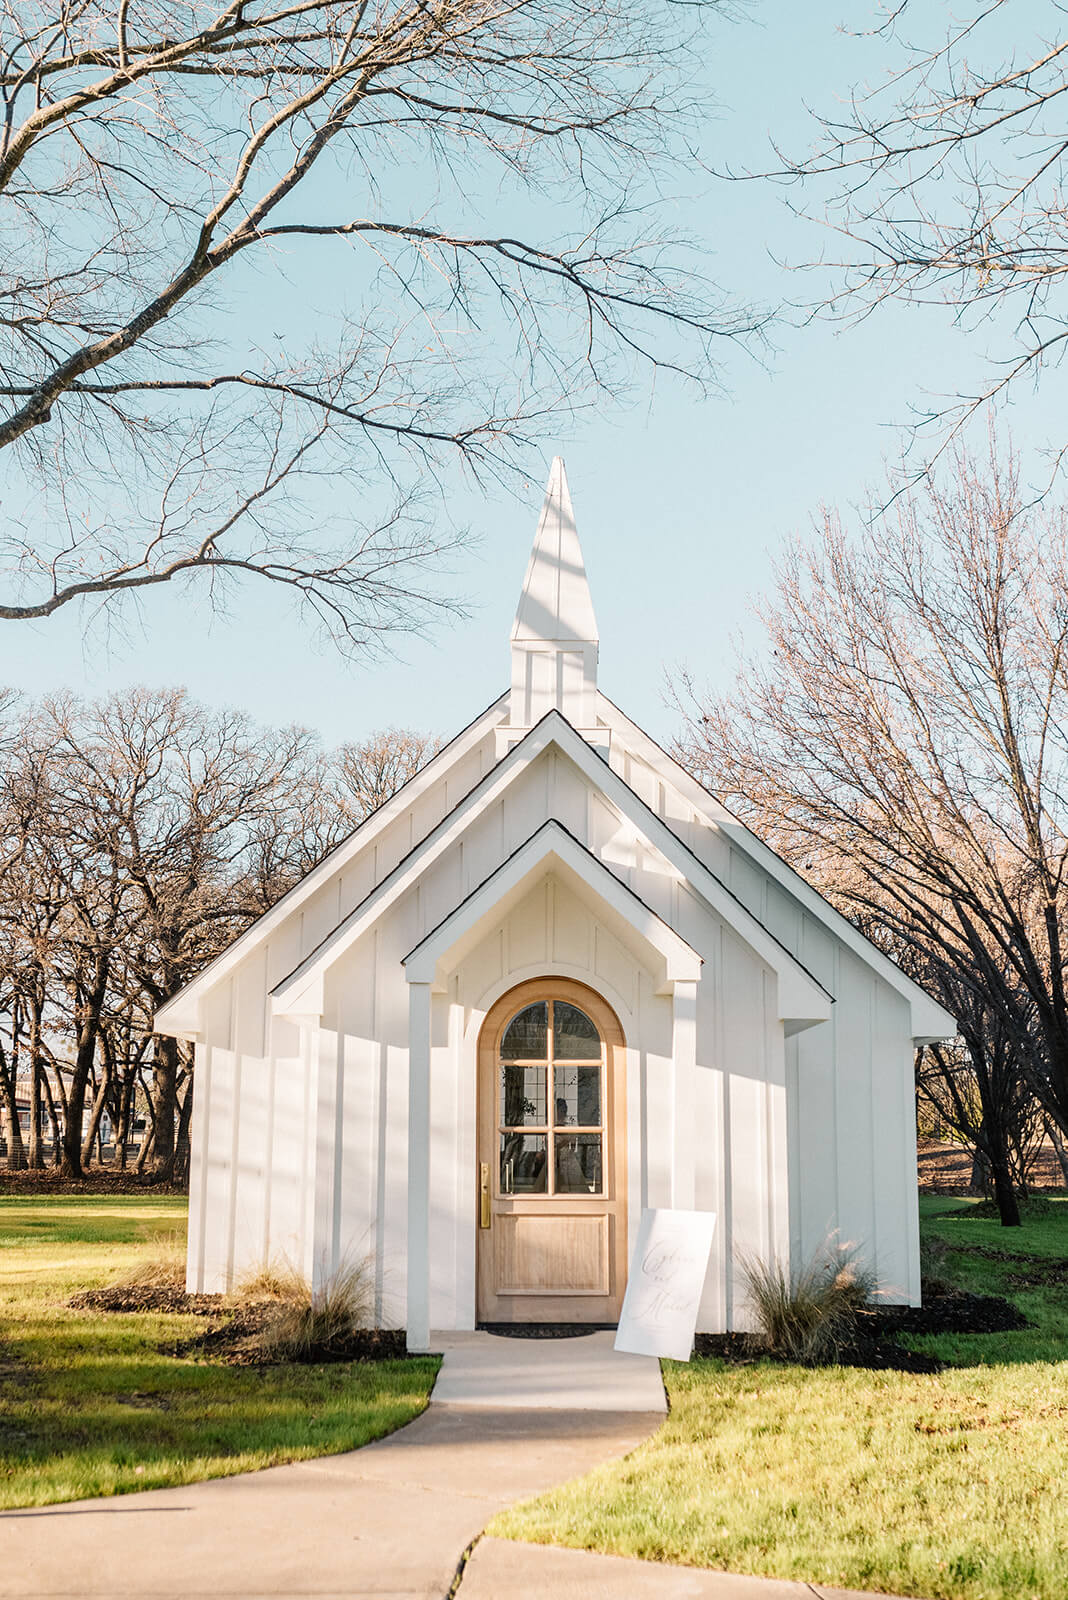 12 stunning wedding chapels across the US - 100 Layer Cake